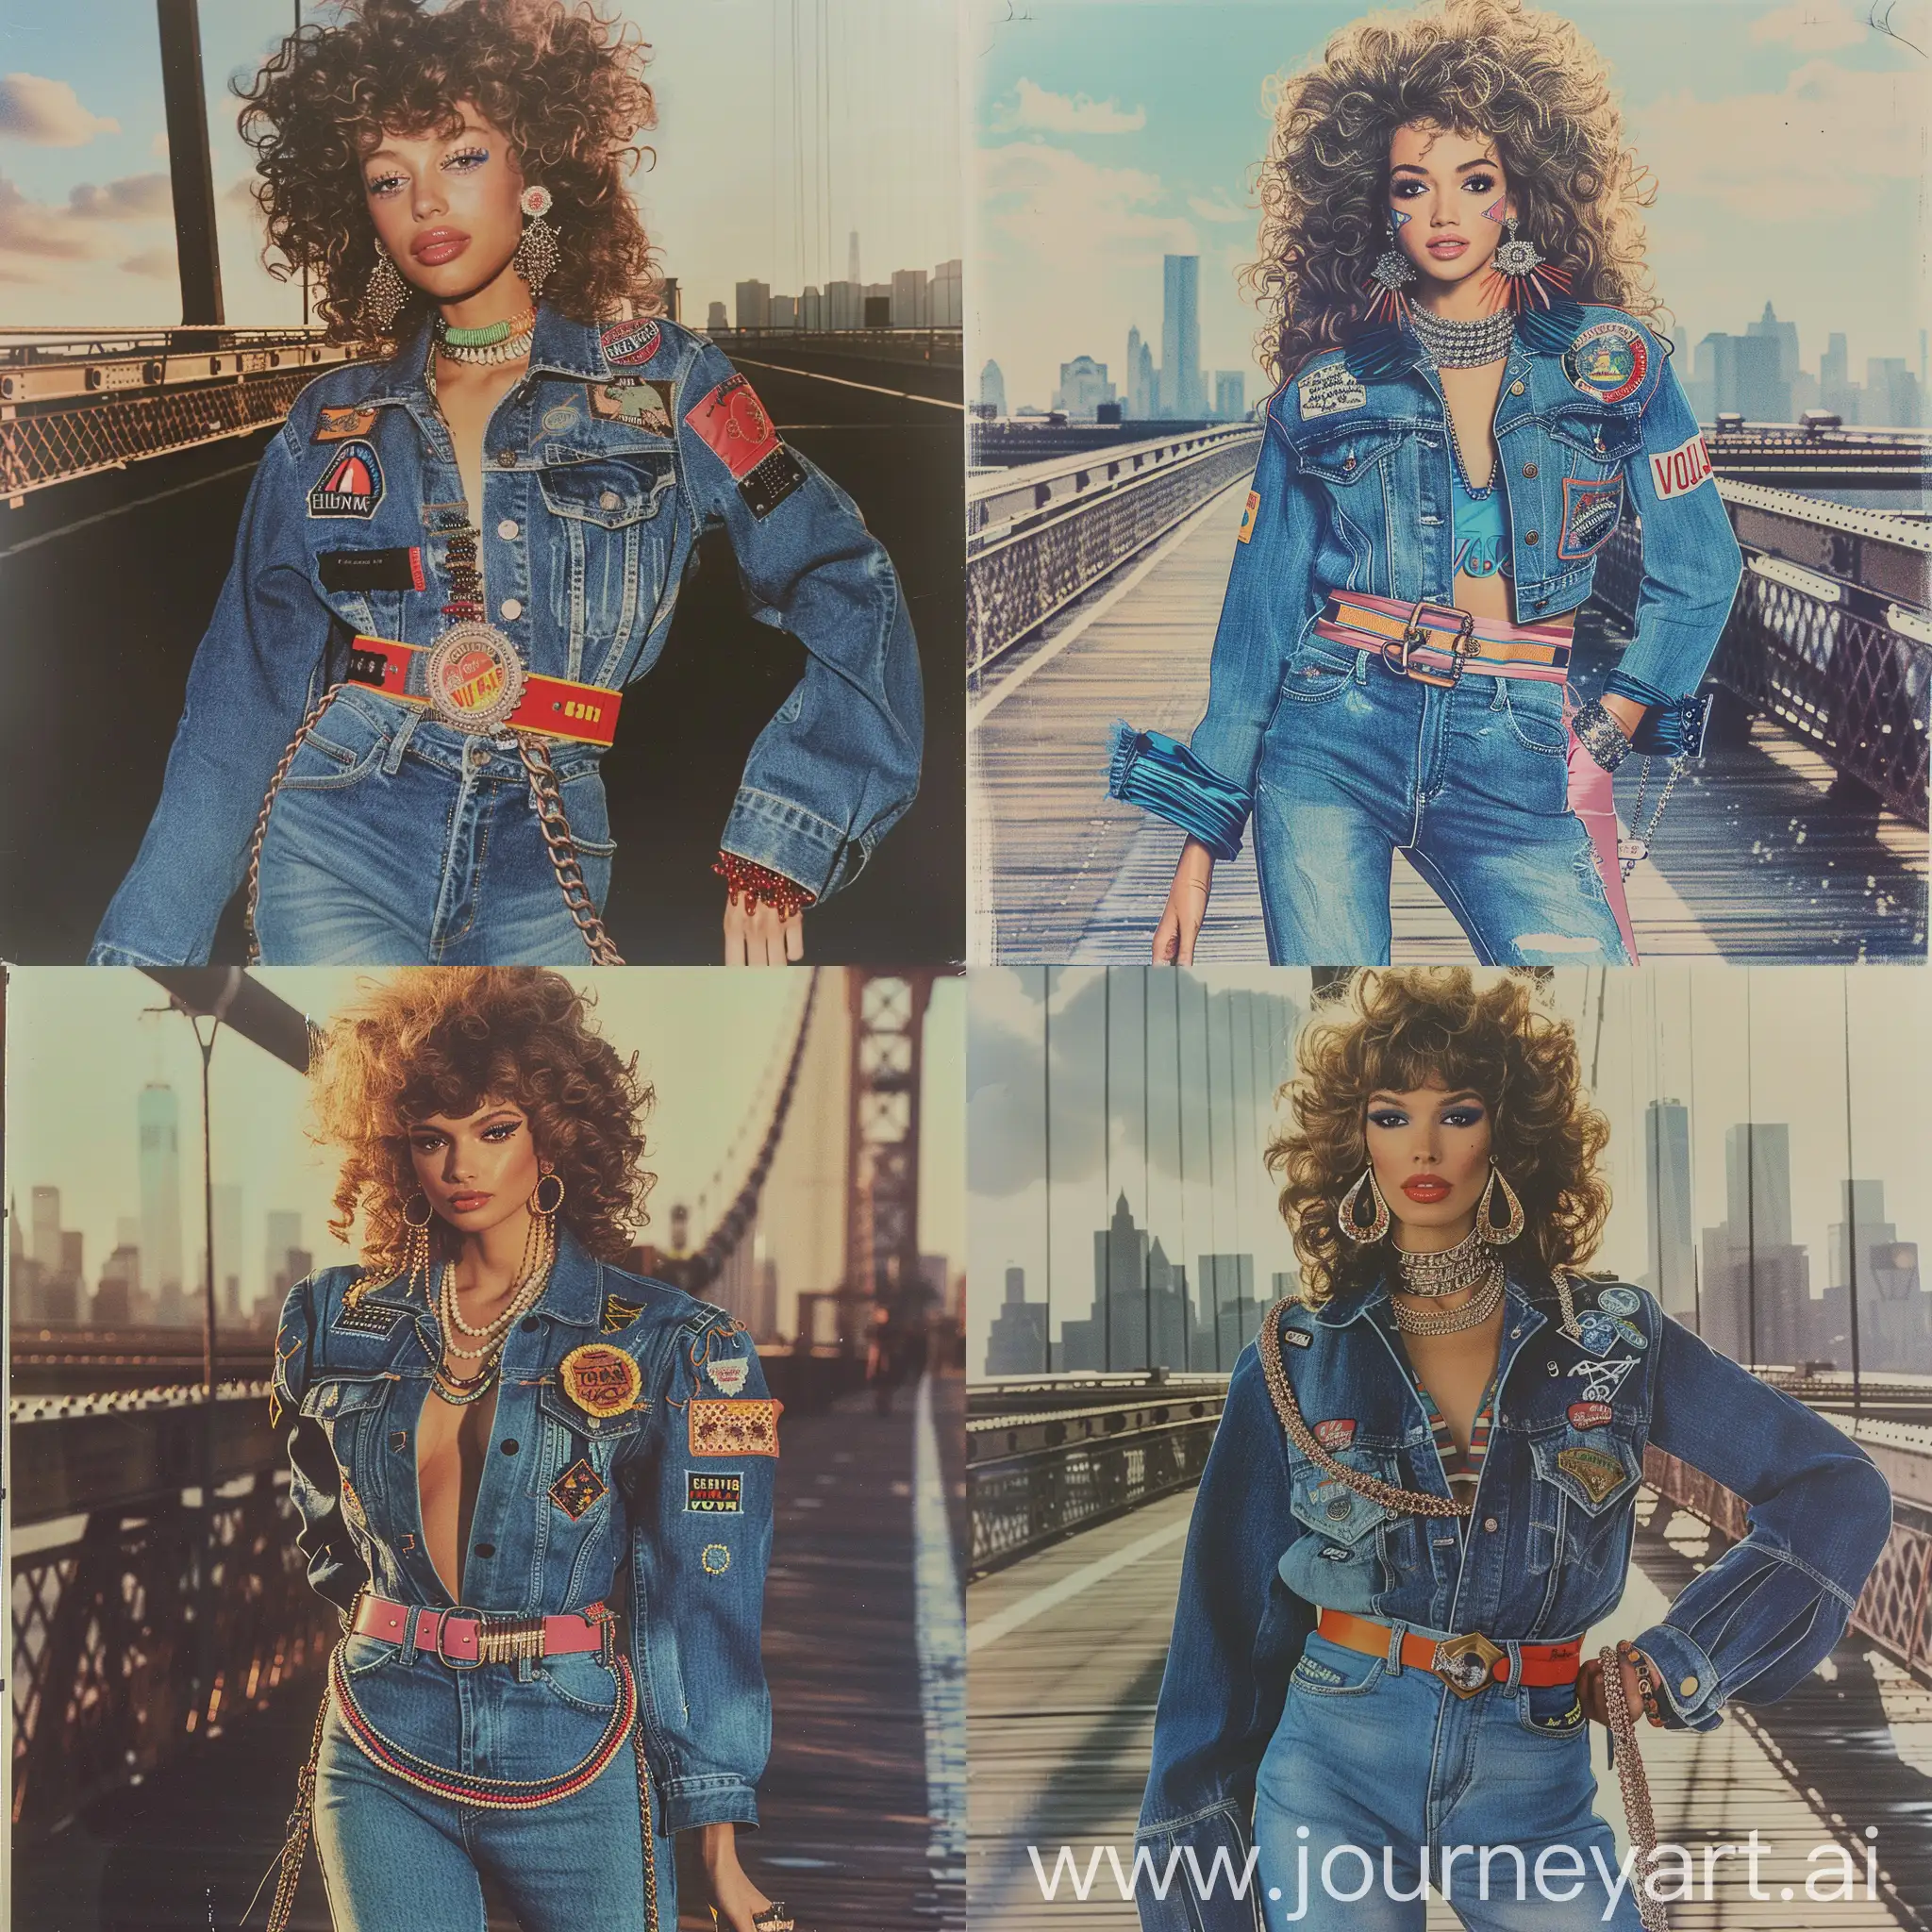 1980s-Fashion-Statement-Erica-Eleniak-on-New-York-Bridge